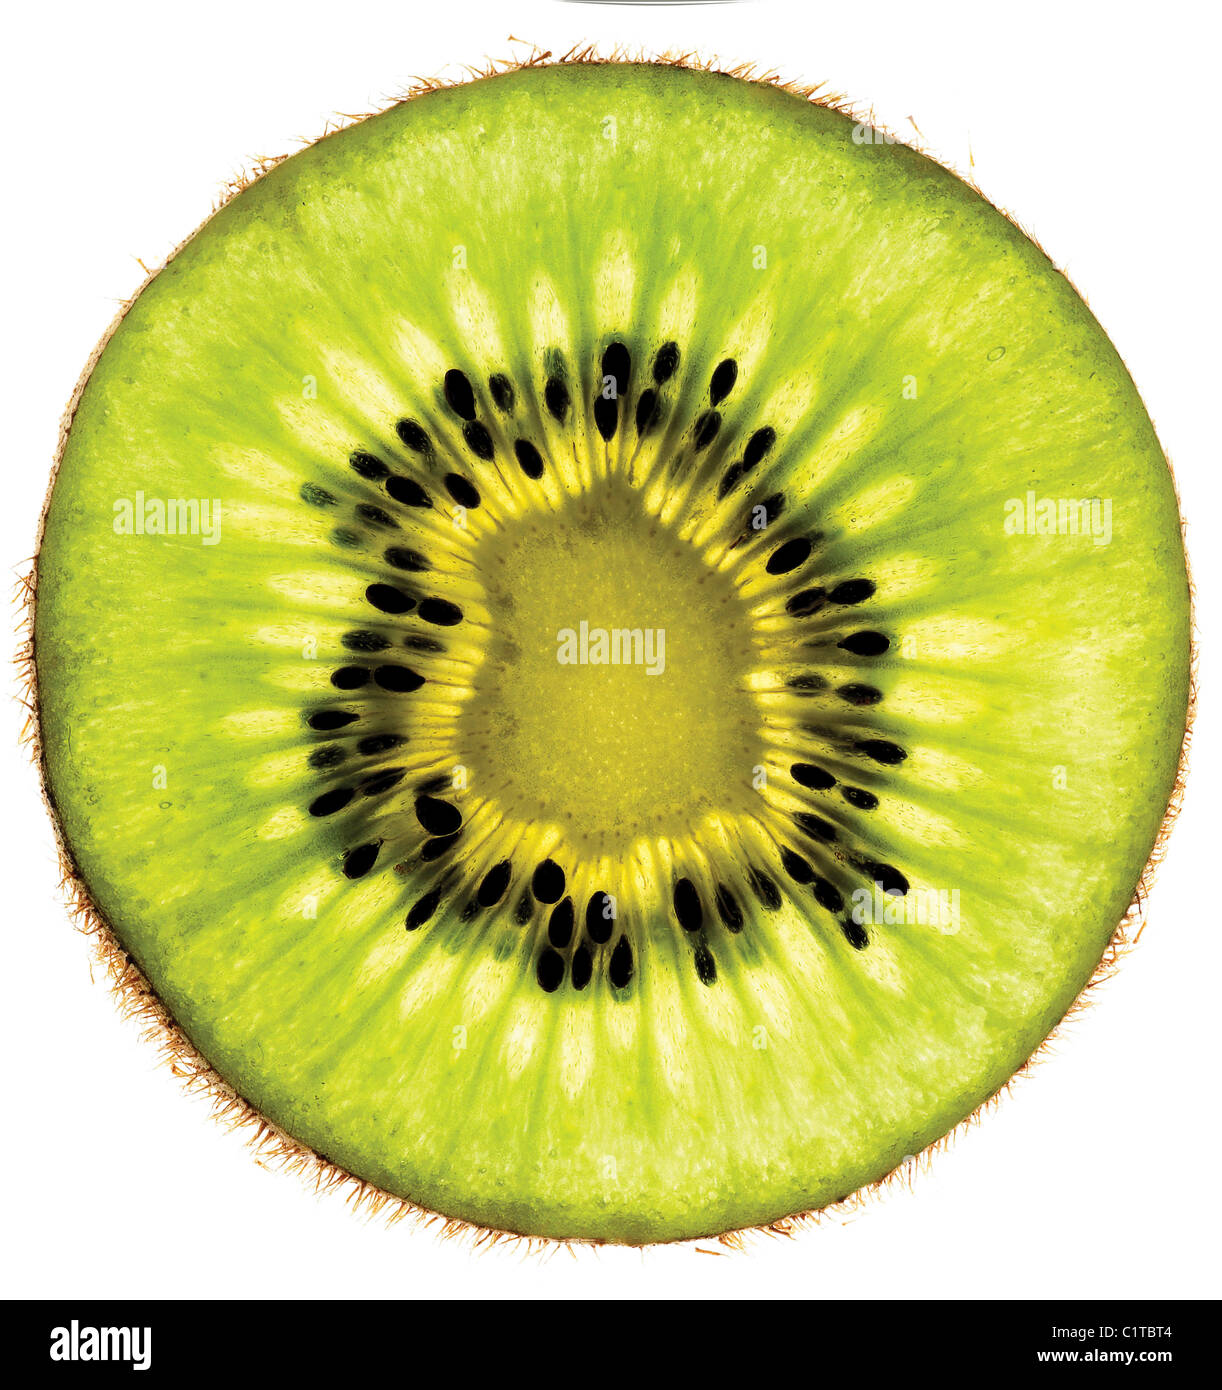 a slice of tasty kiwi fruit Stock Photo